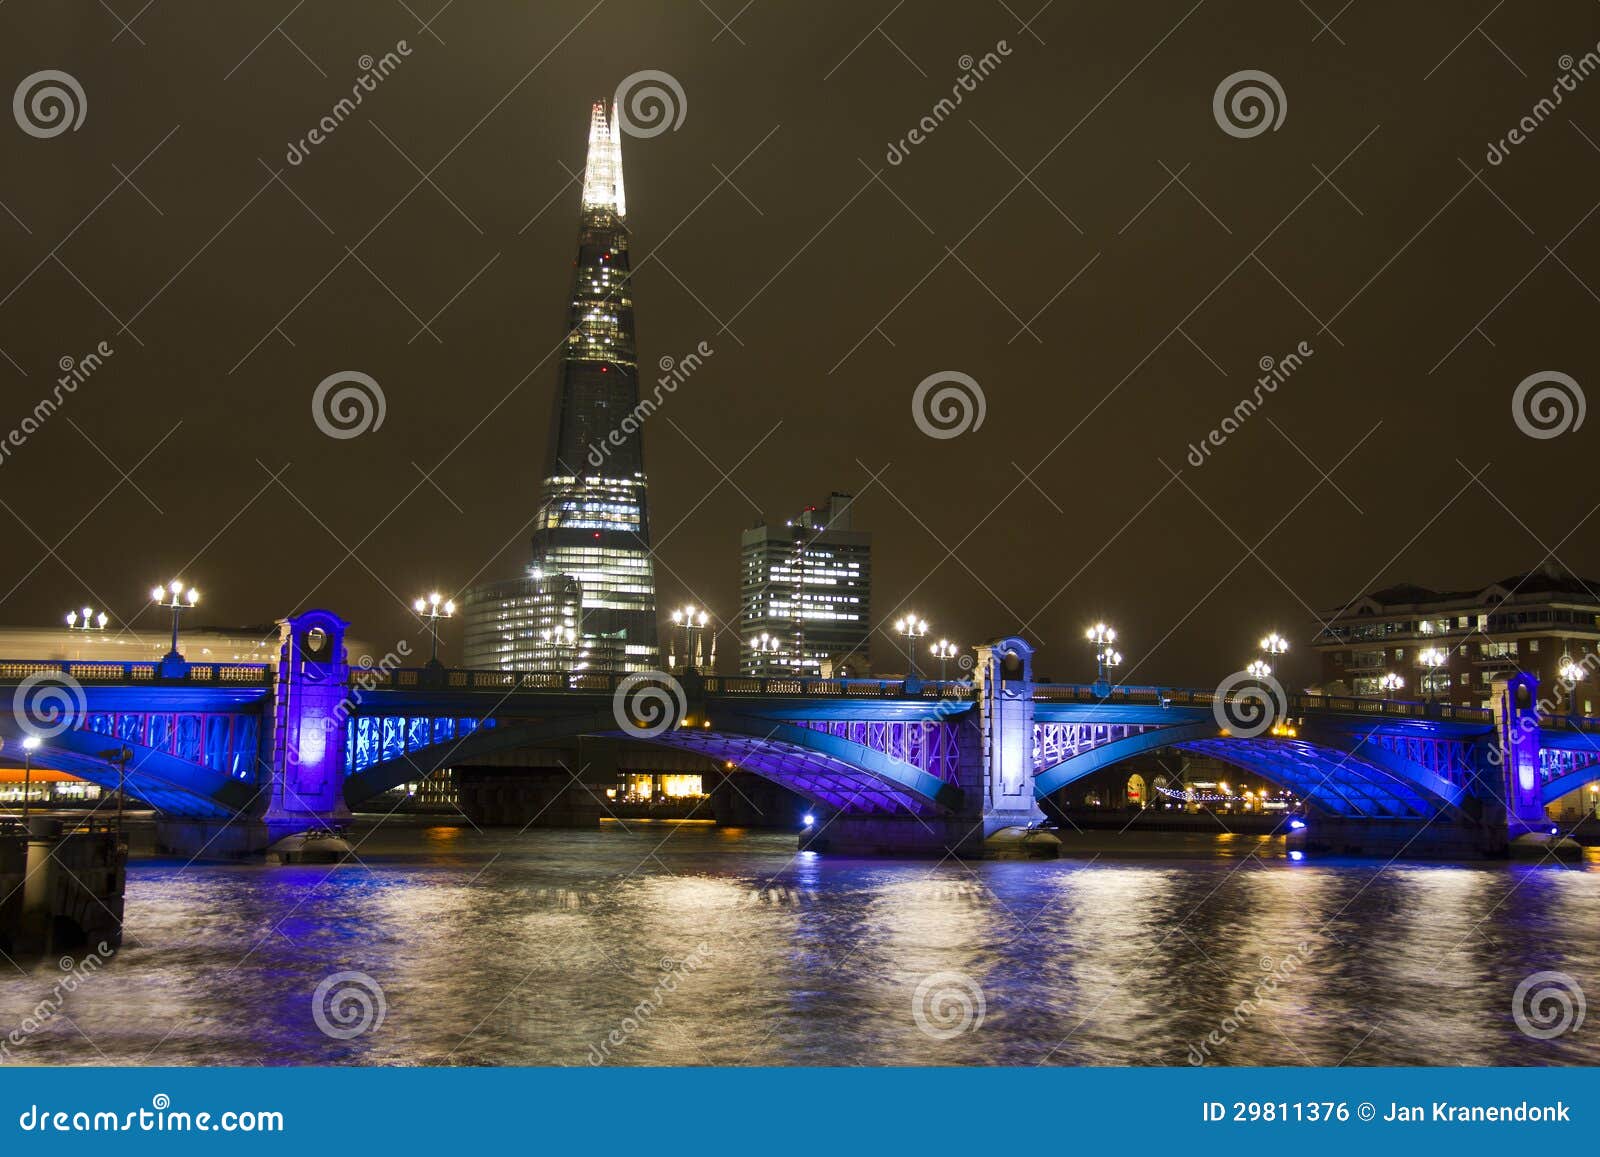 southwark bridge and the shard in london